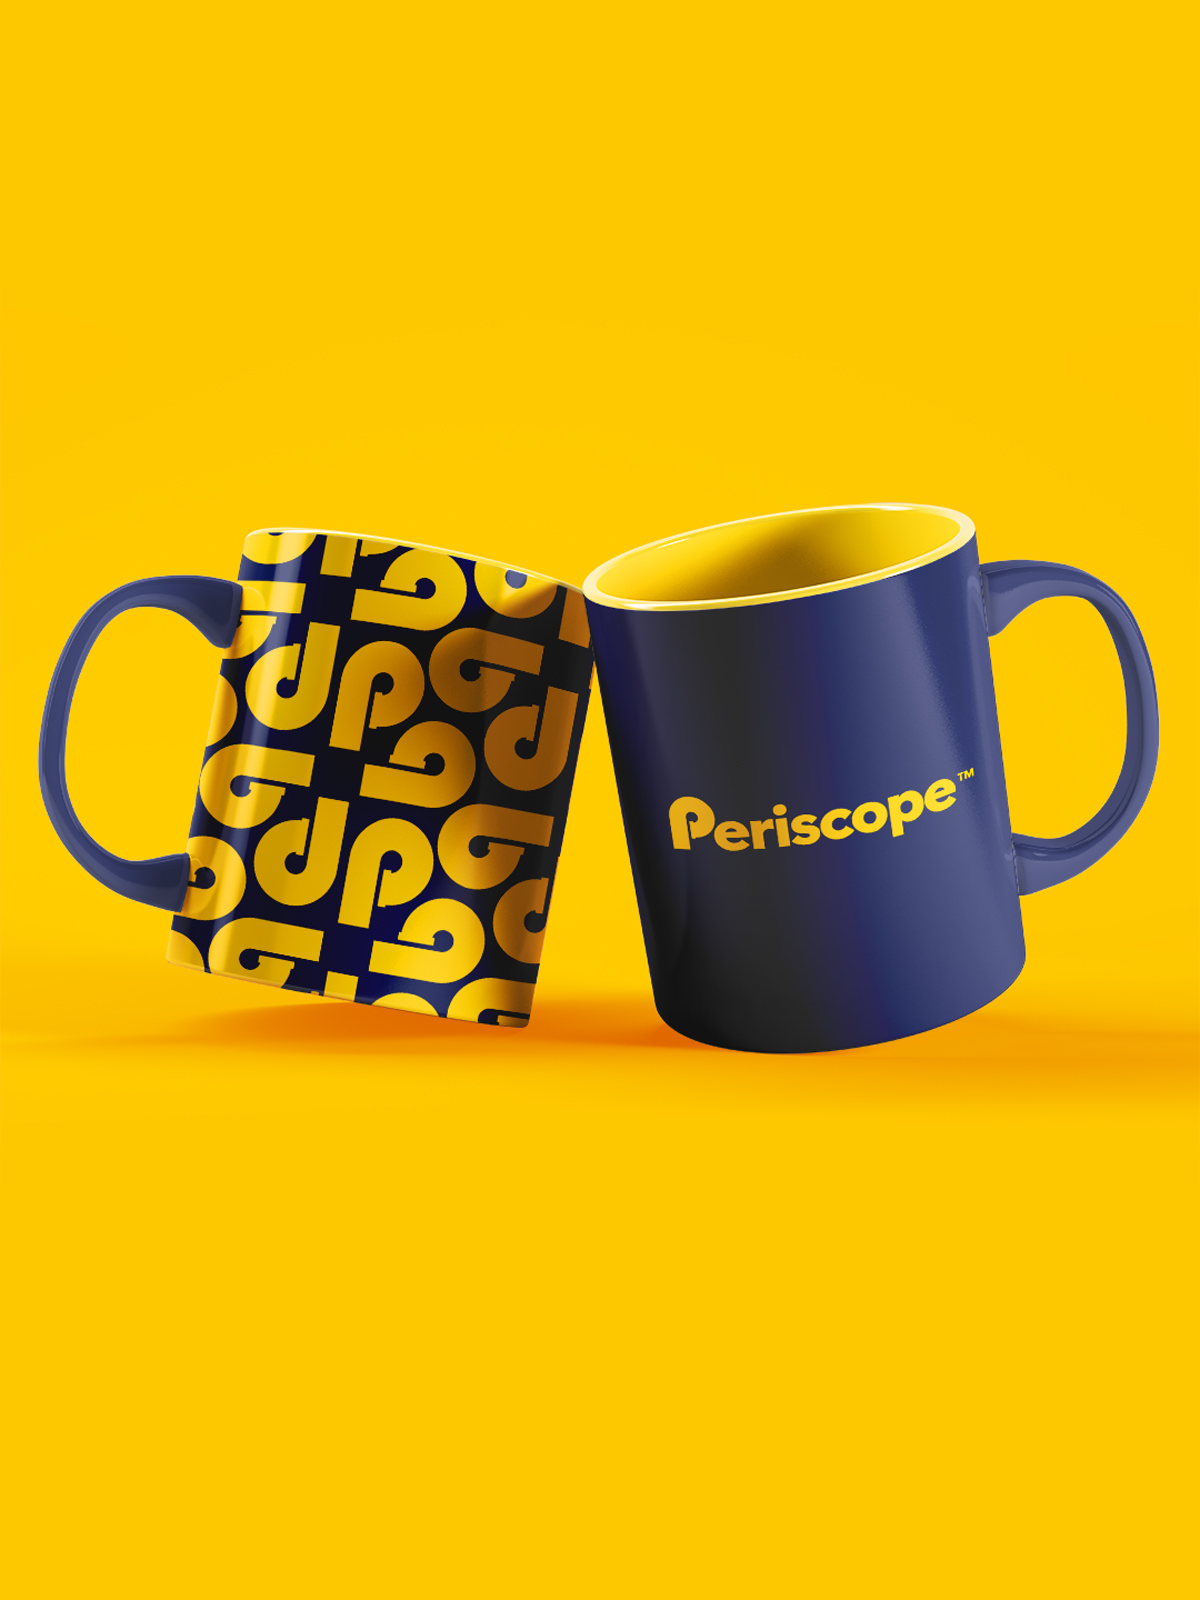 Periscope Brand, Platform and Livery